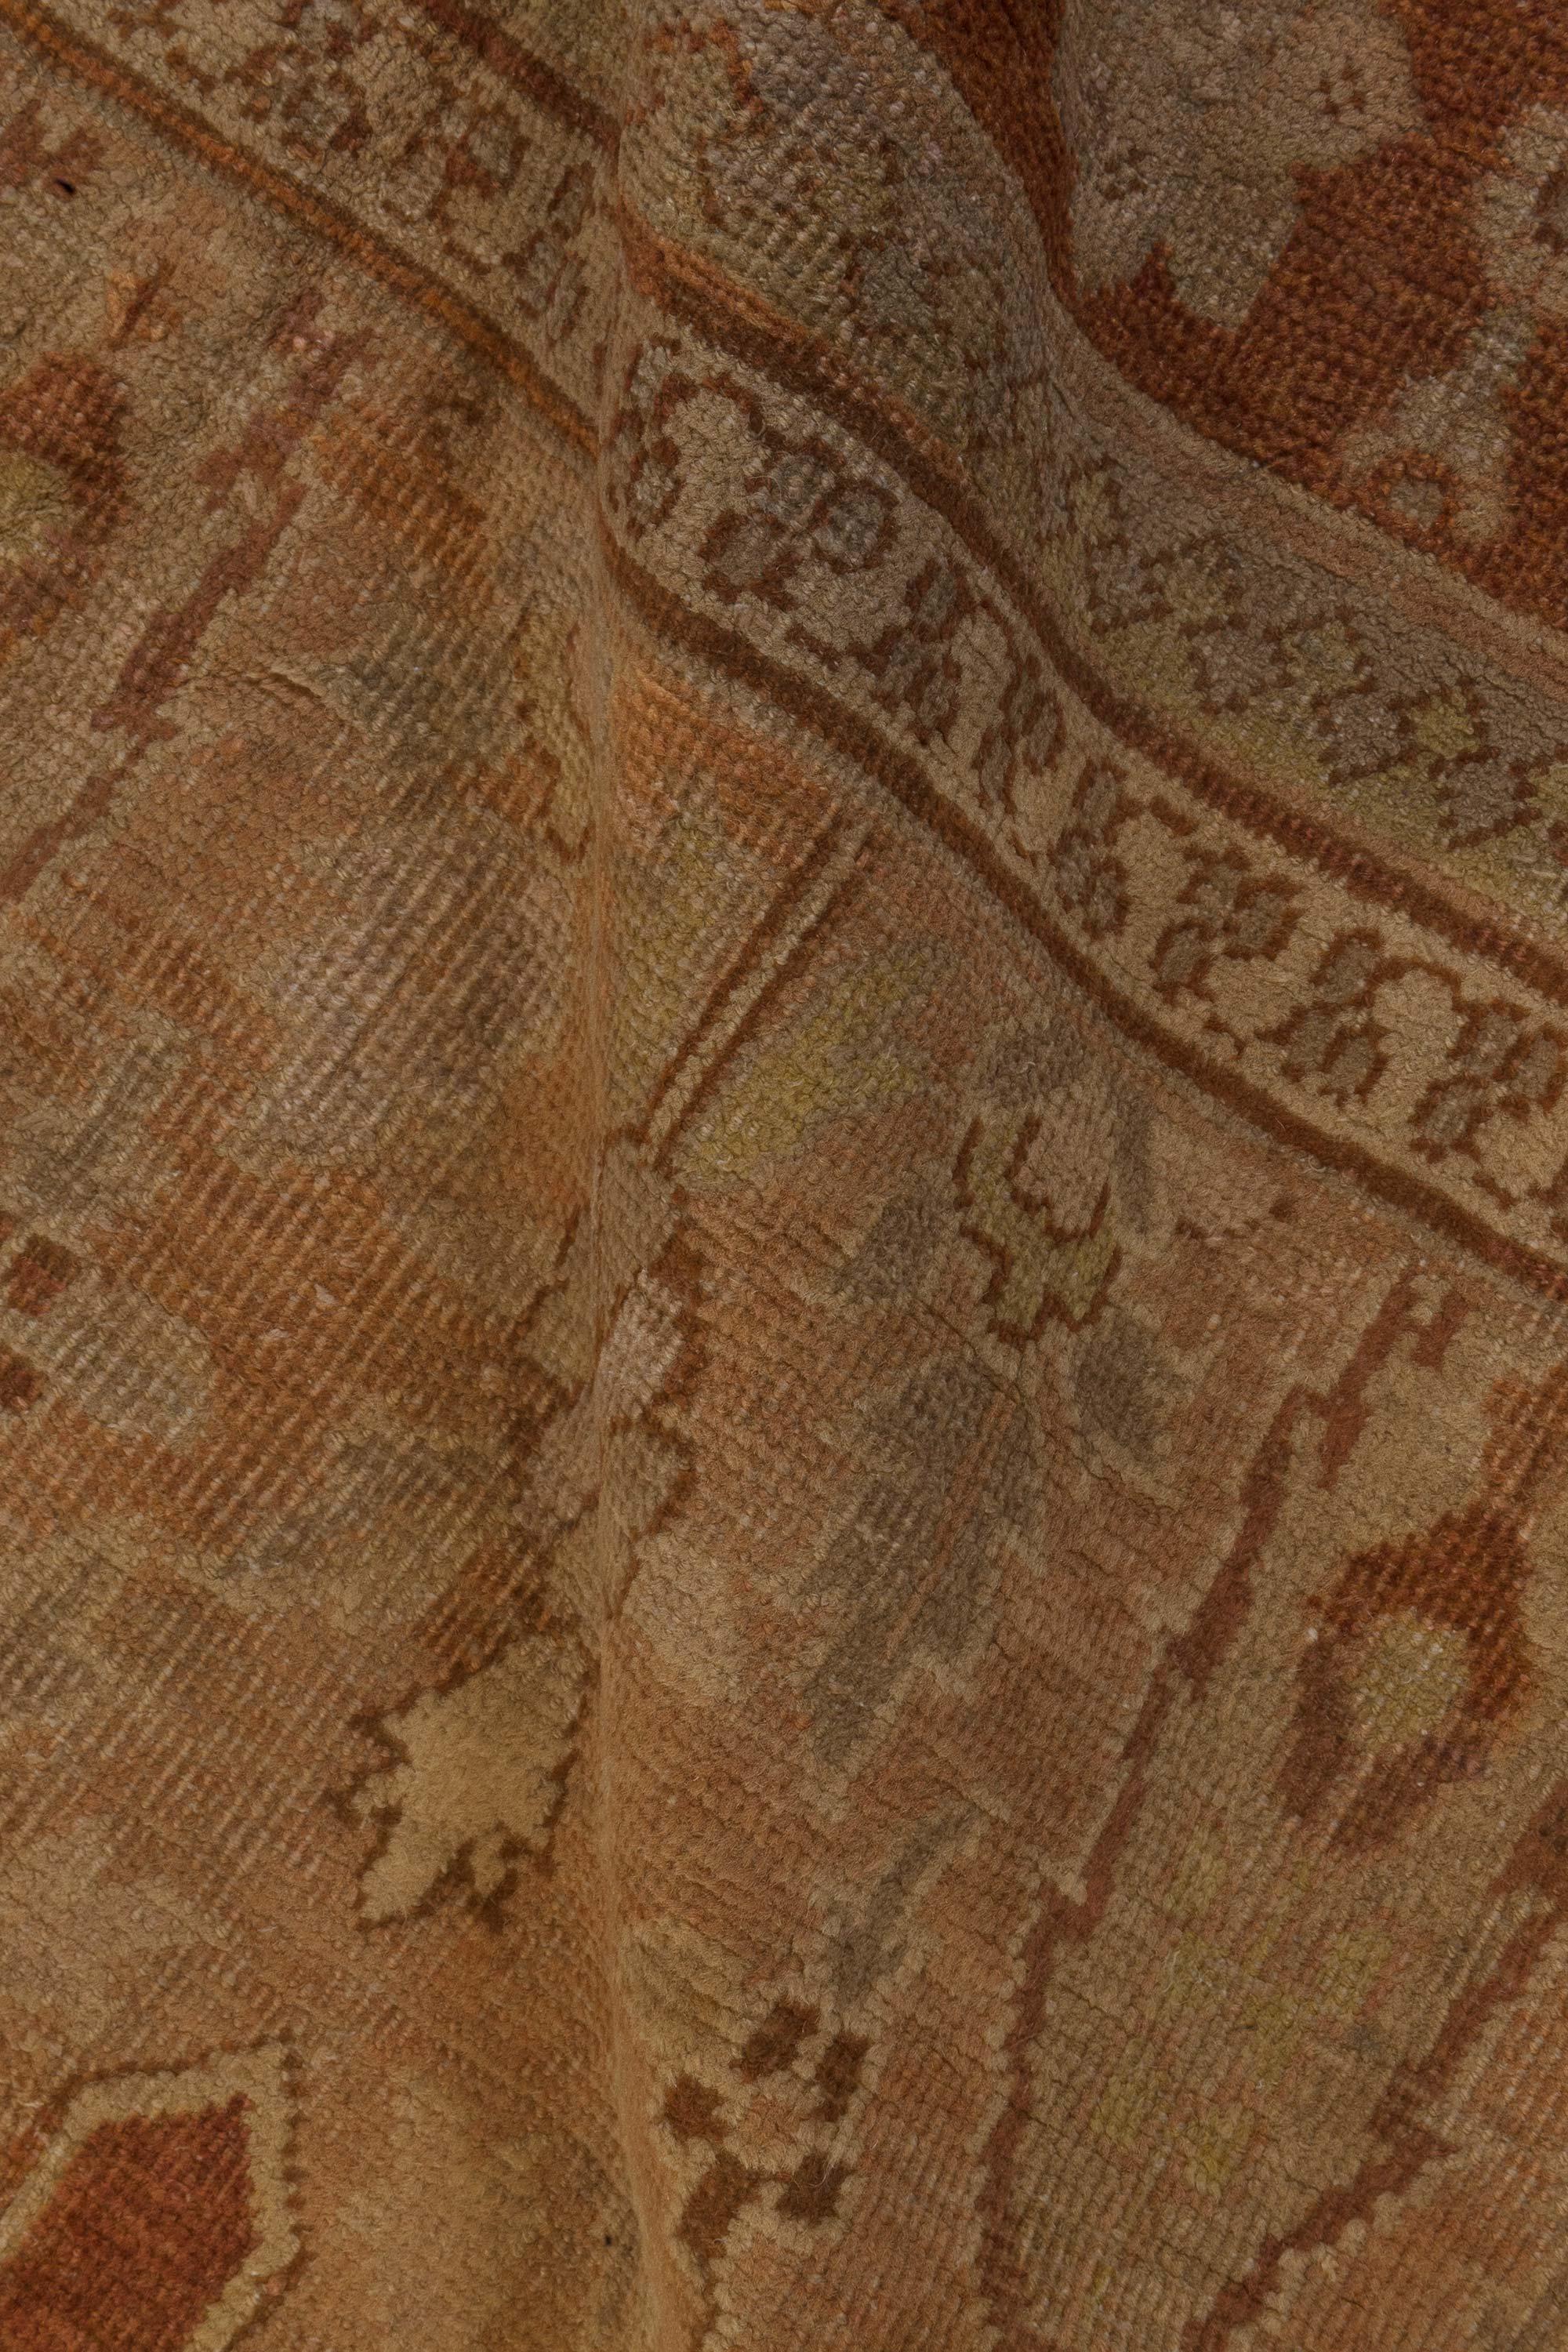 Authentic 19th century Indian Amritsar carpet
Size: 10'0